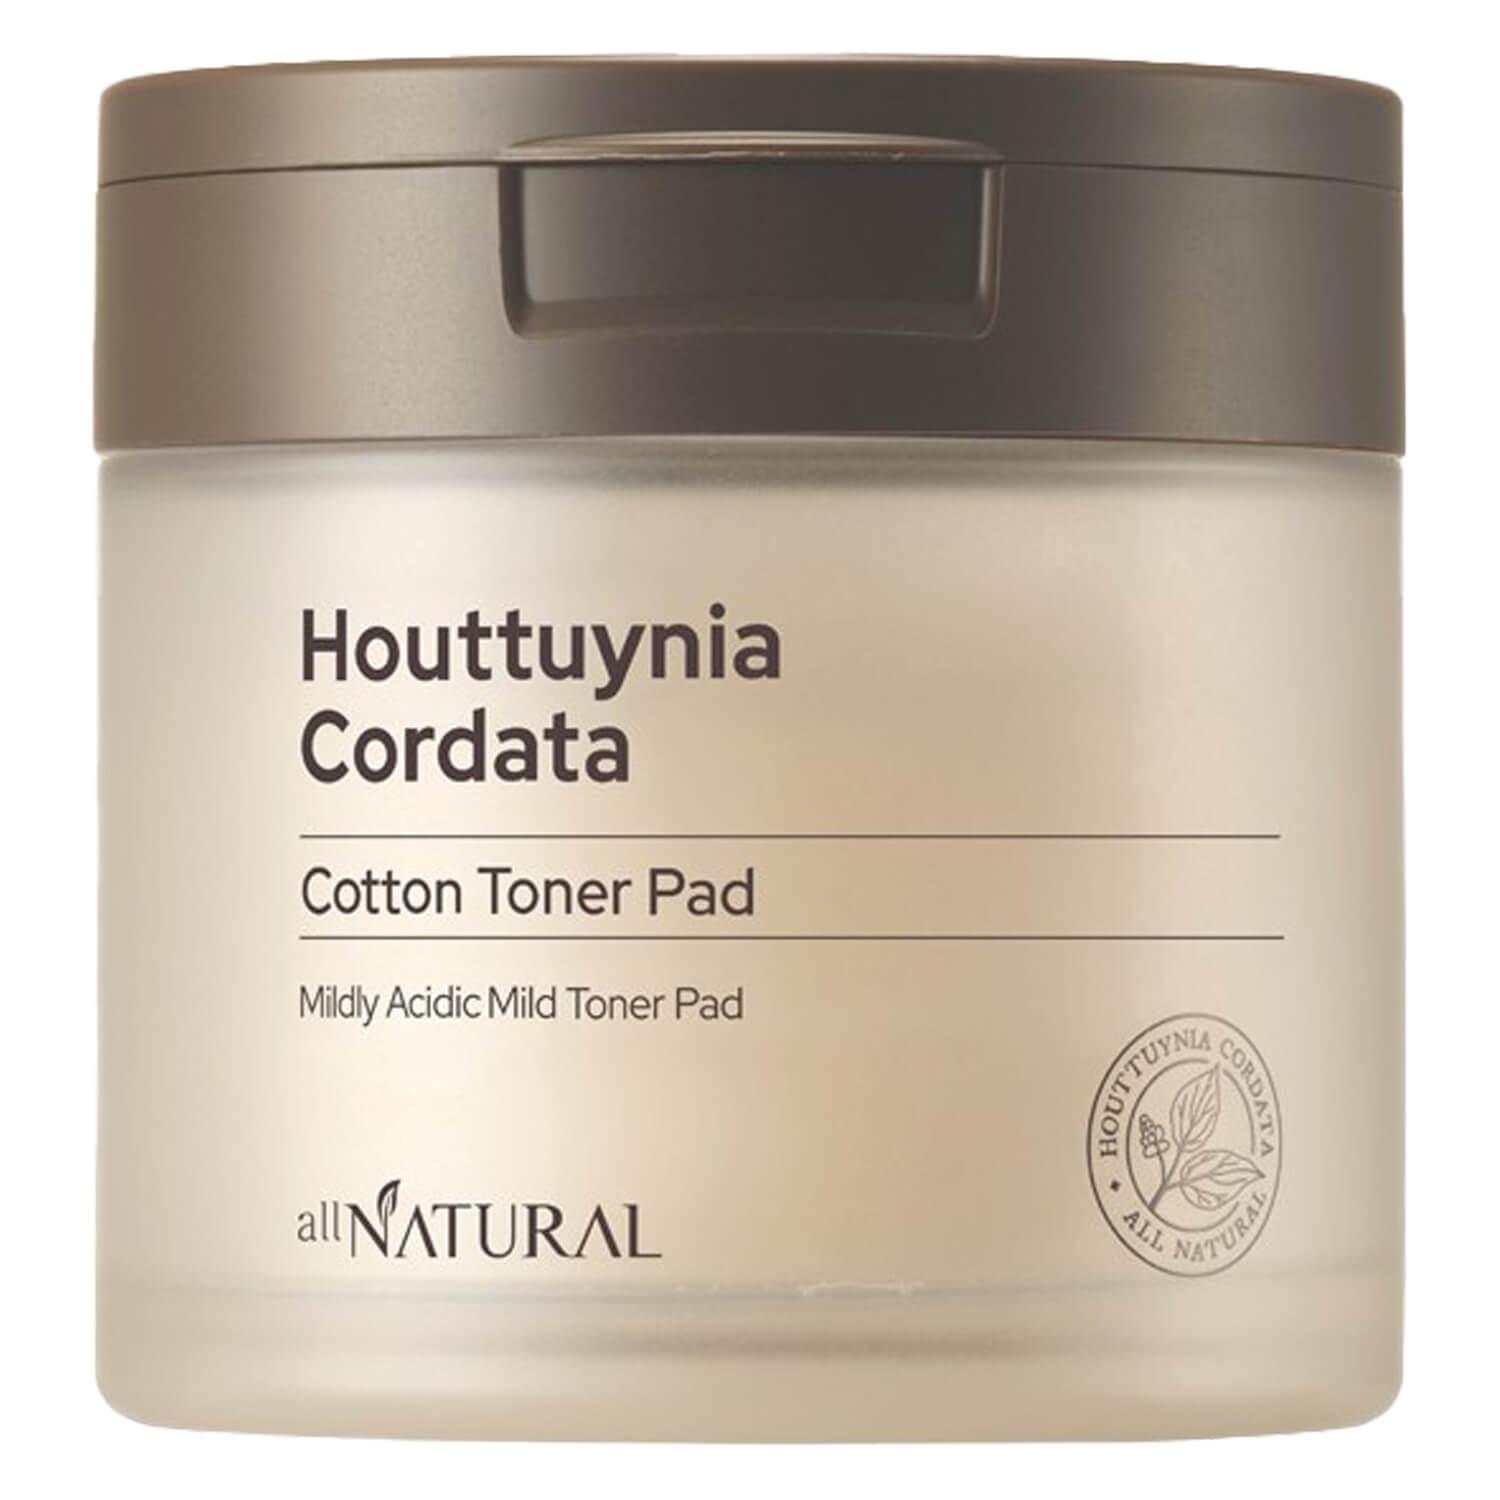 all NATURAL - Houttuynia Cordata Cotton Toner Pad